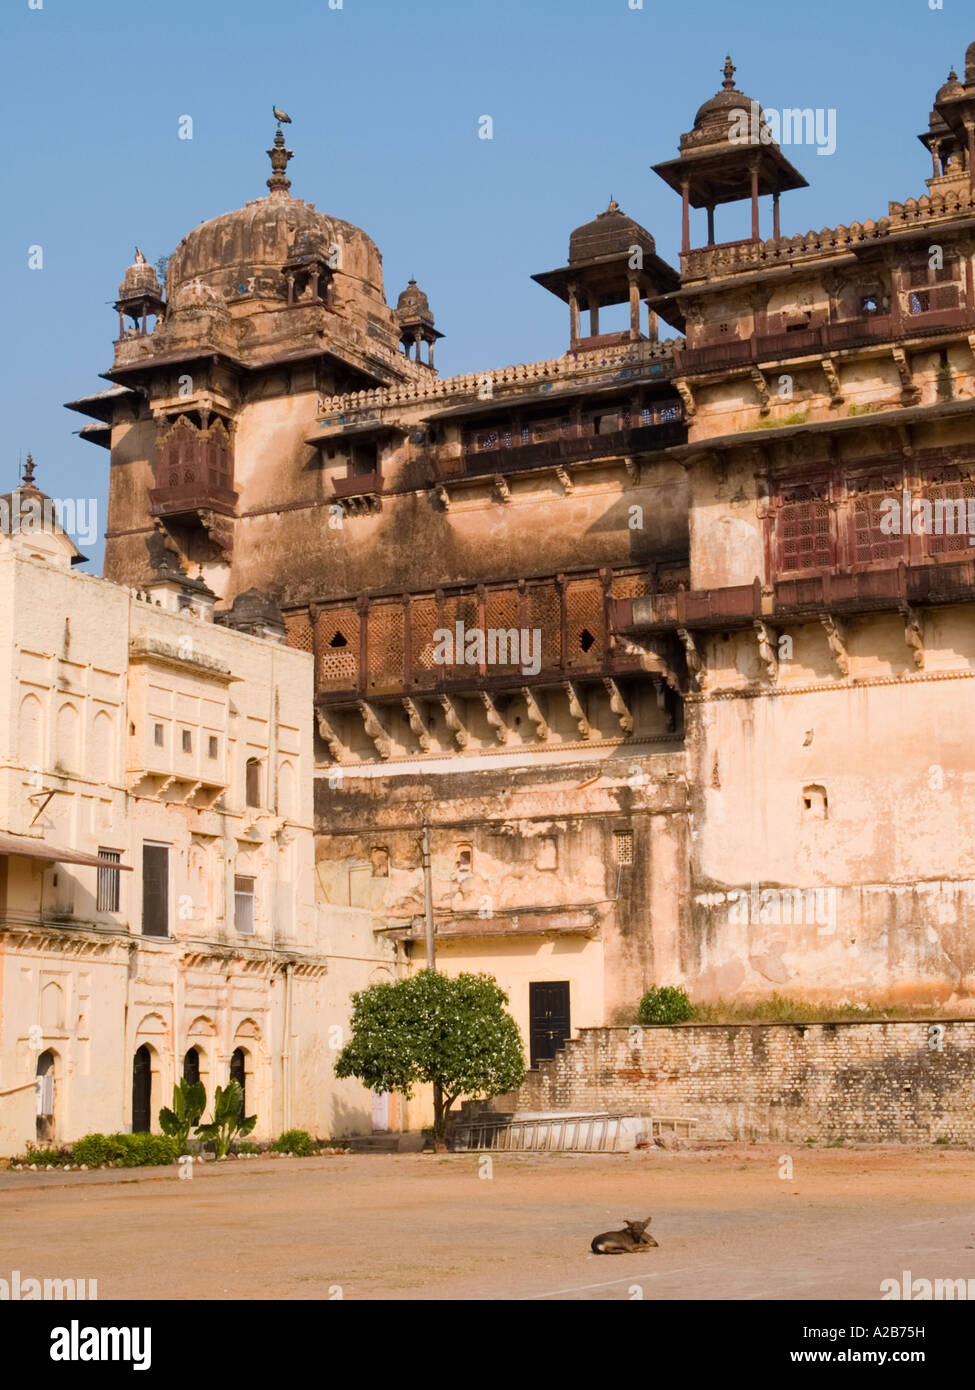 17th century Jahangir Mahal Palace Tiered palace crowned by chhatris domed pavilions Orchha Madhya Pradesh India Stock Photo